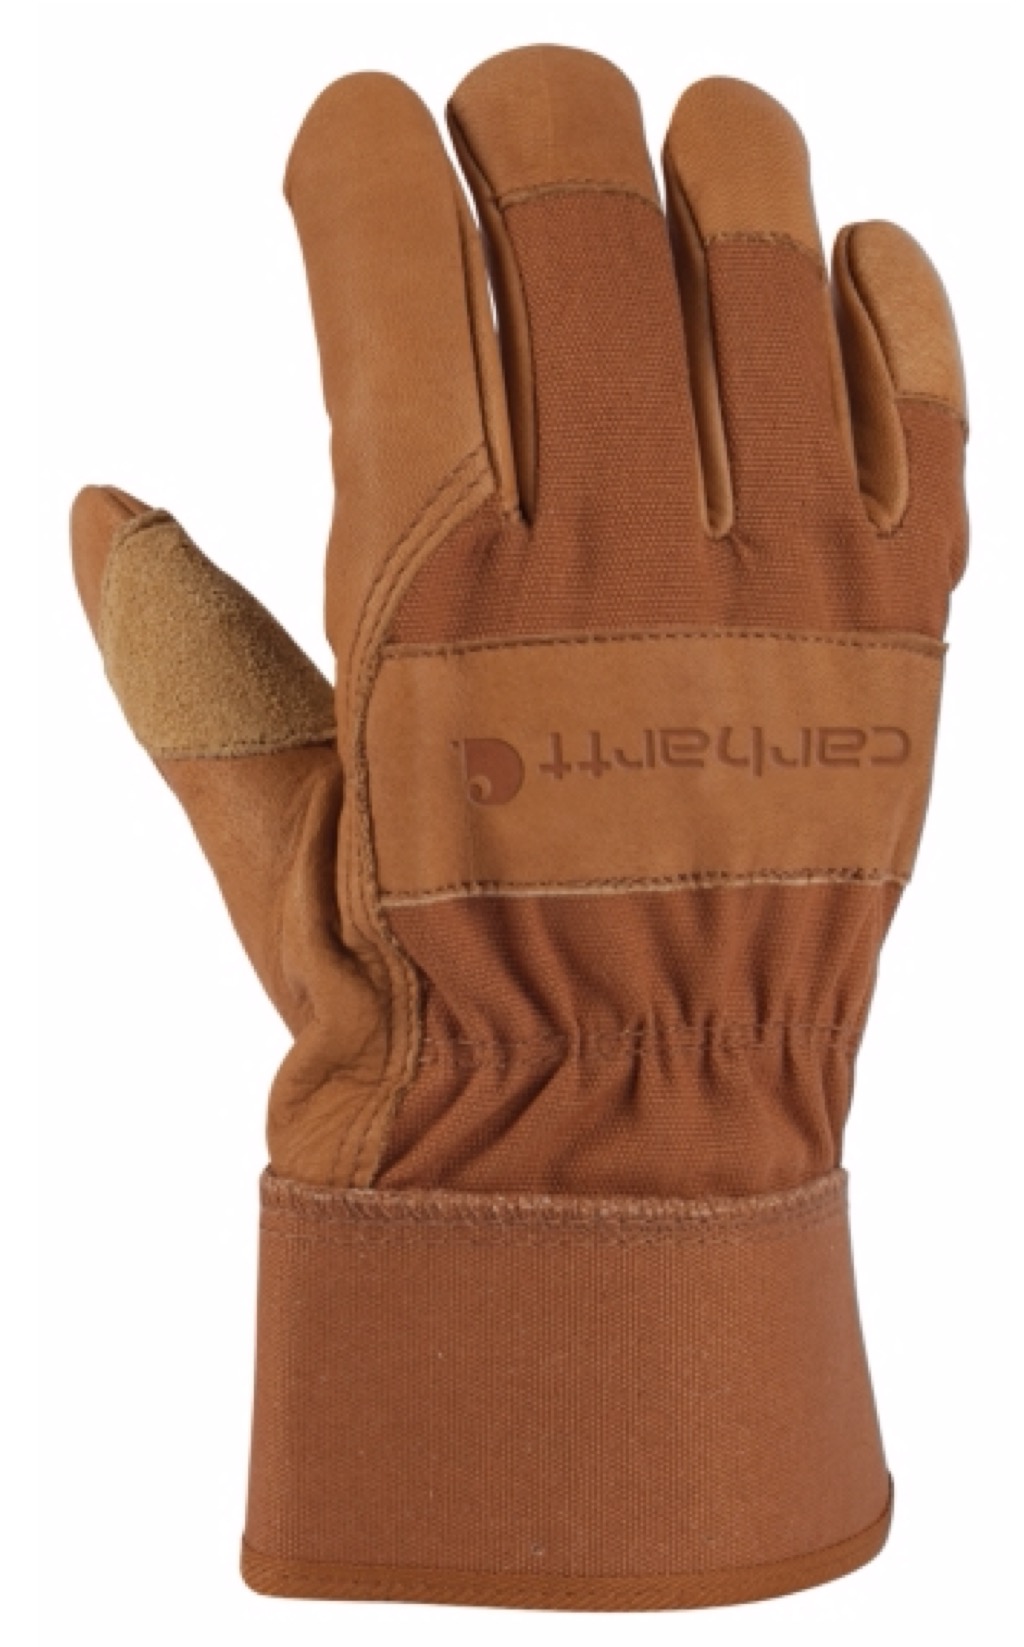 Carhartt Work Gloves